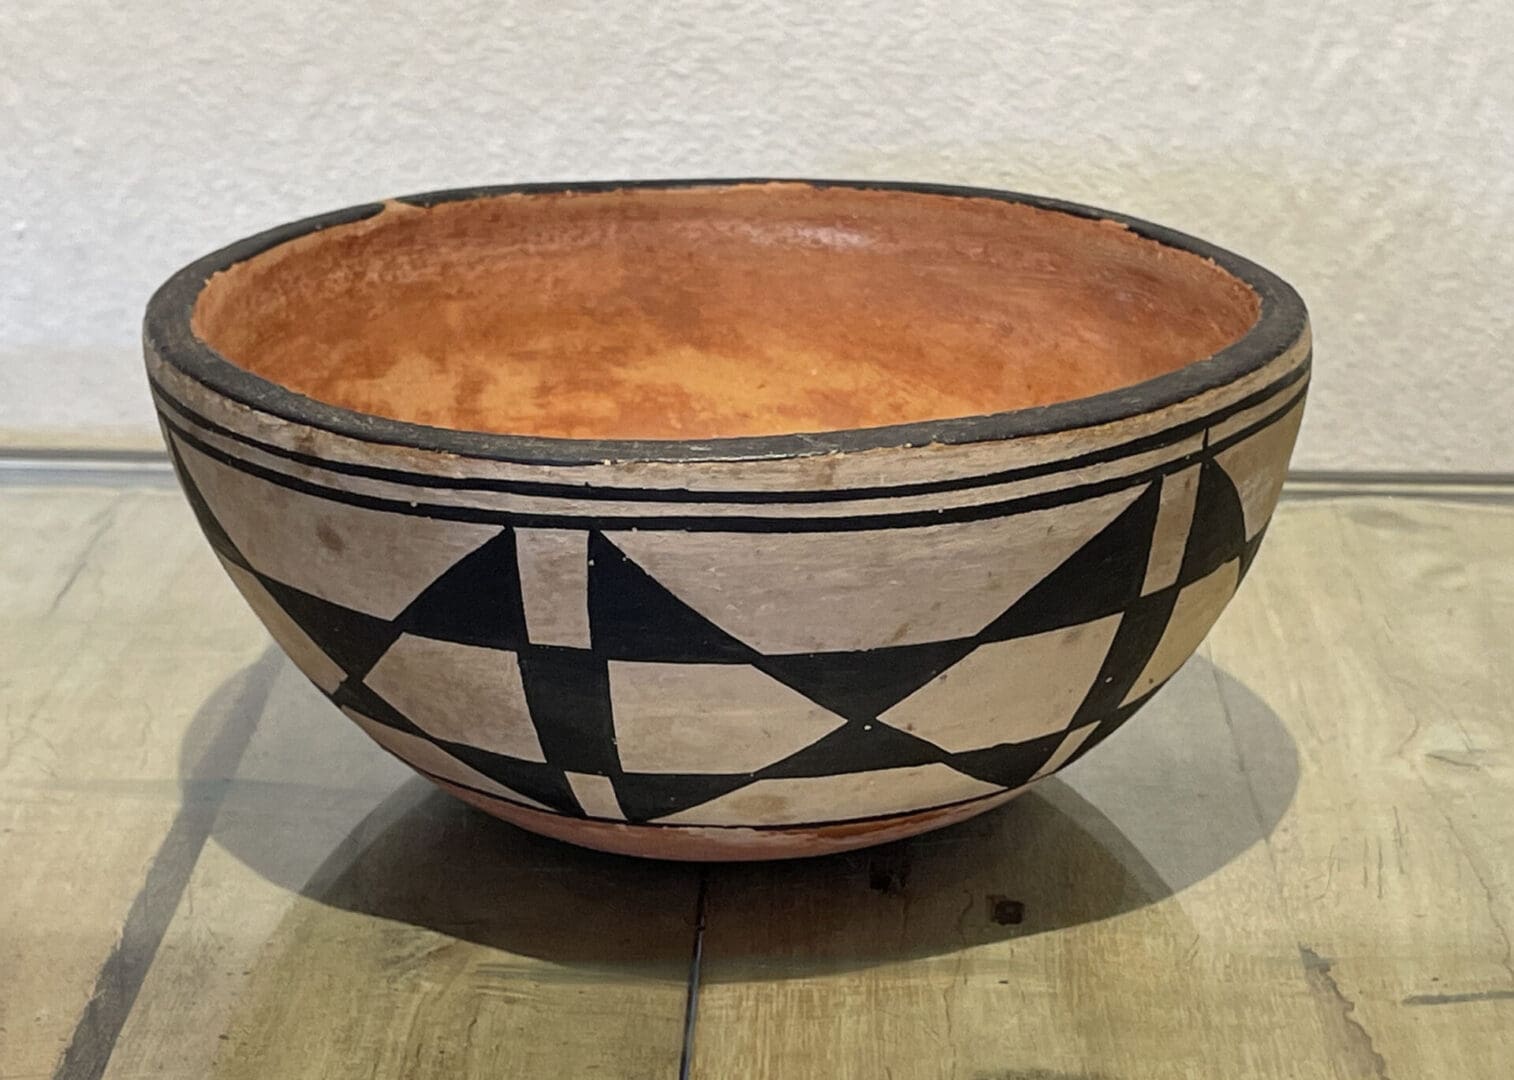 Pueblo Painted Bowl